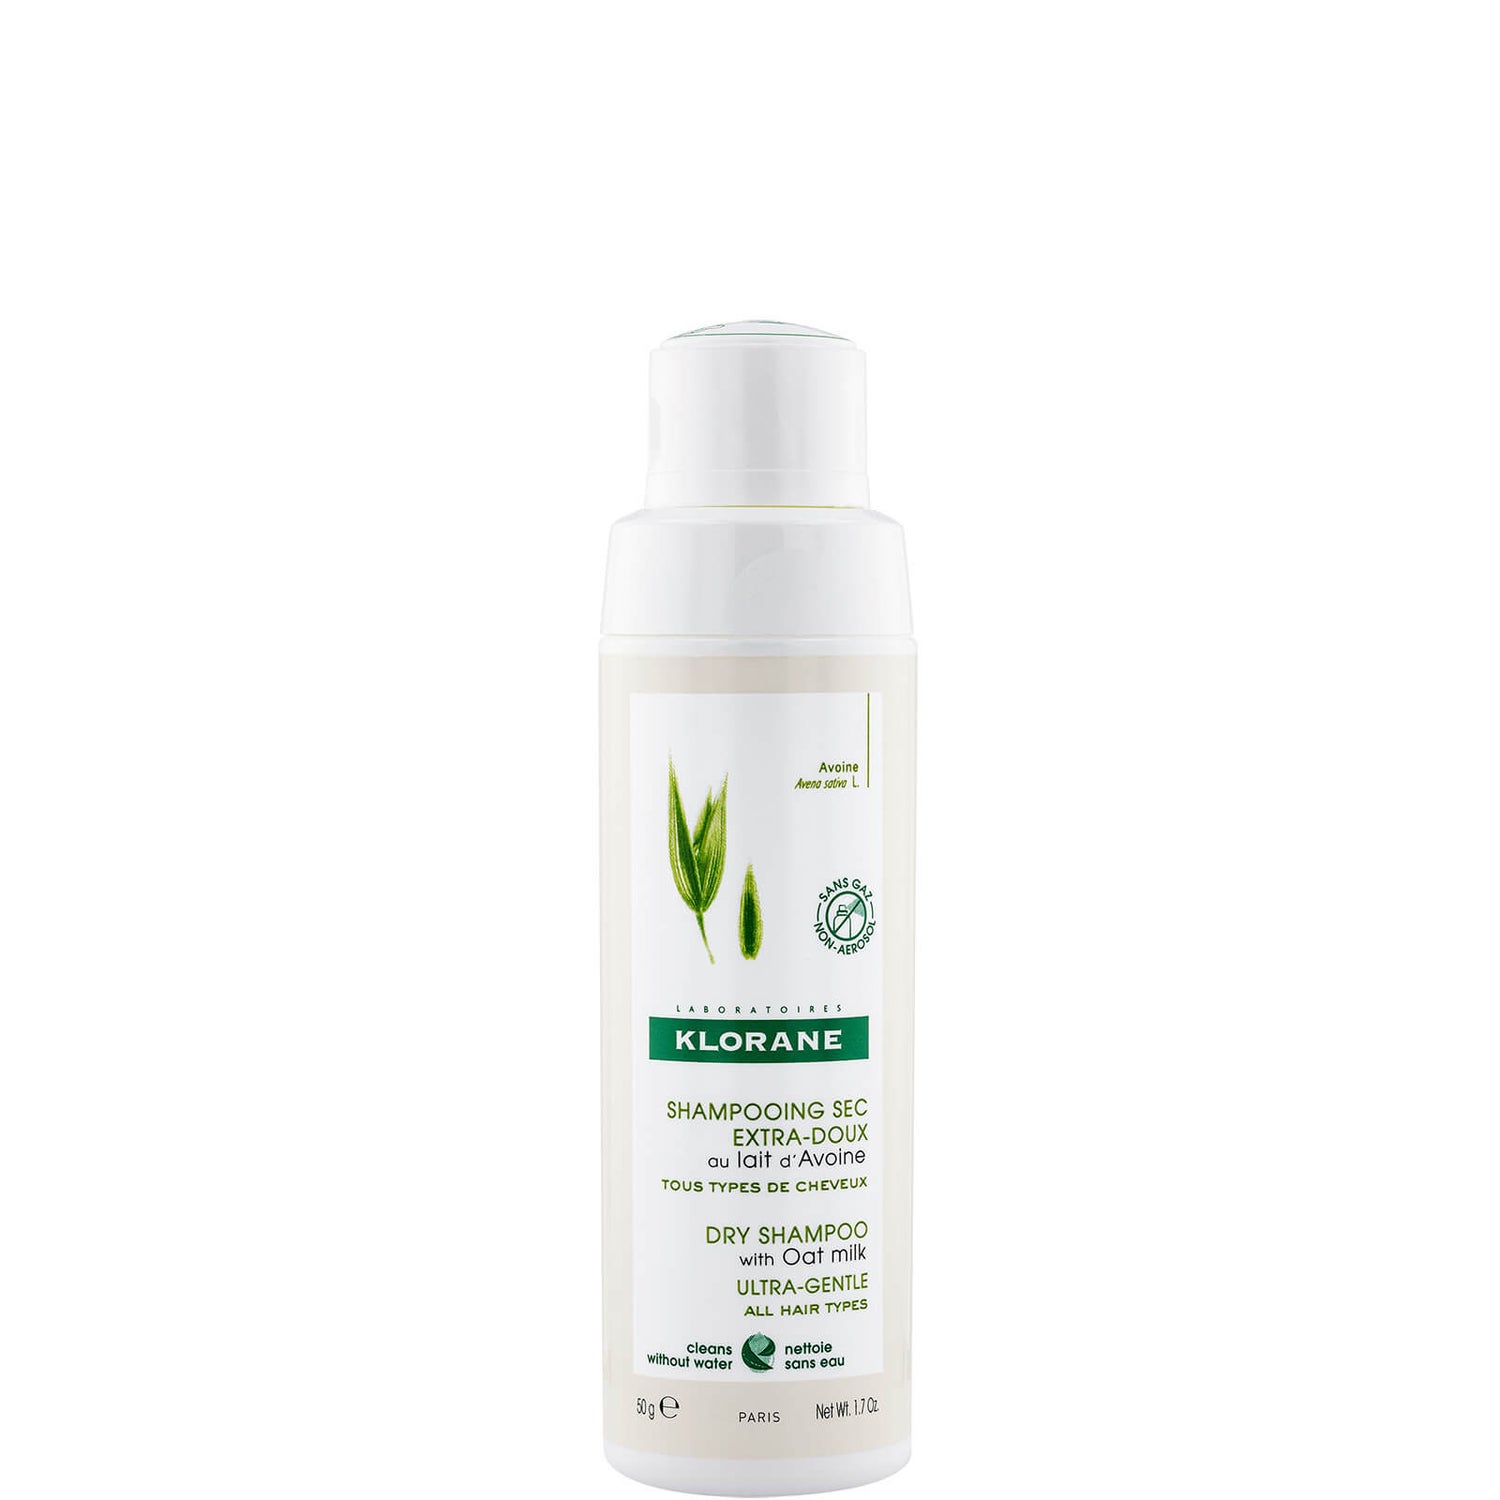 KLORANE Eco-Friendly Dry Shampoo with Oat Milk for All Hair Types -shampoo, 50 g